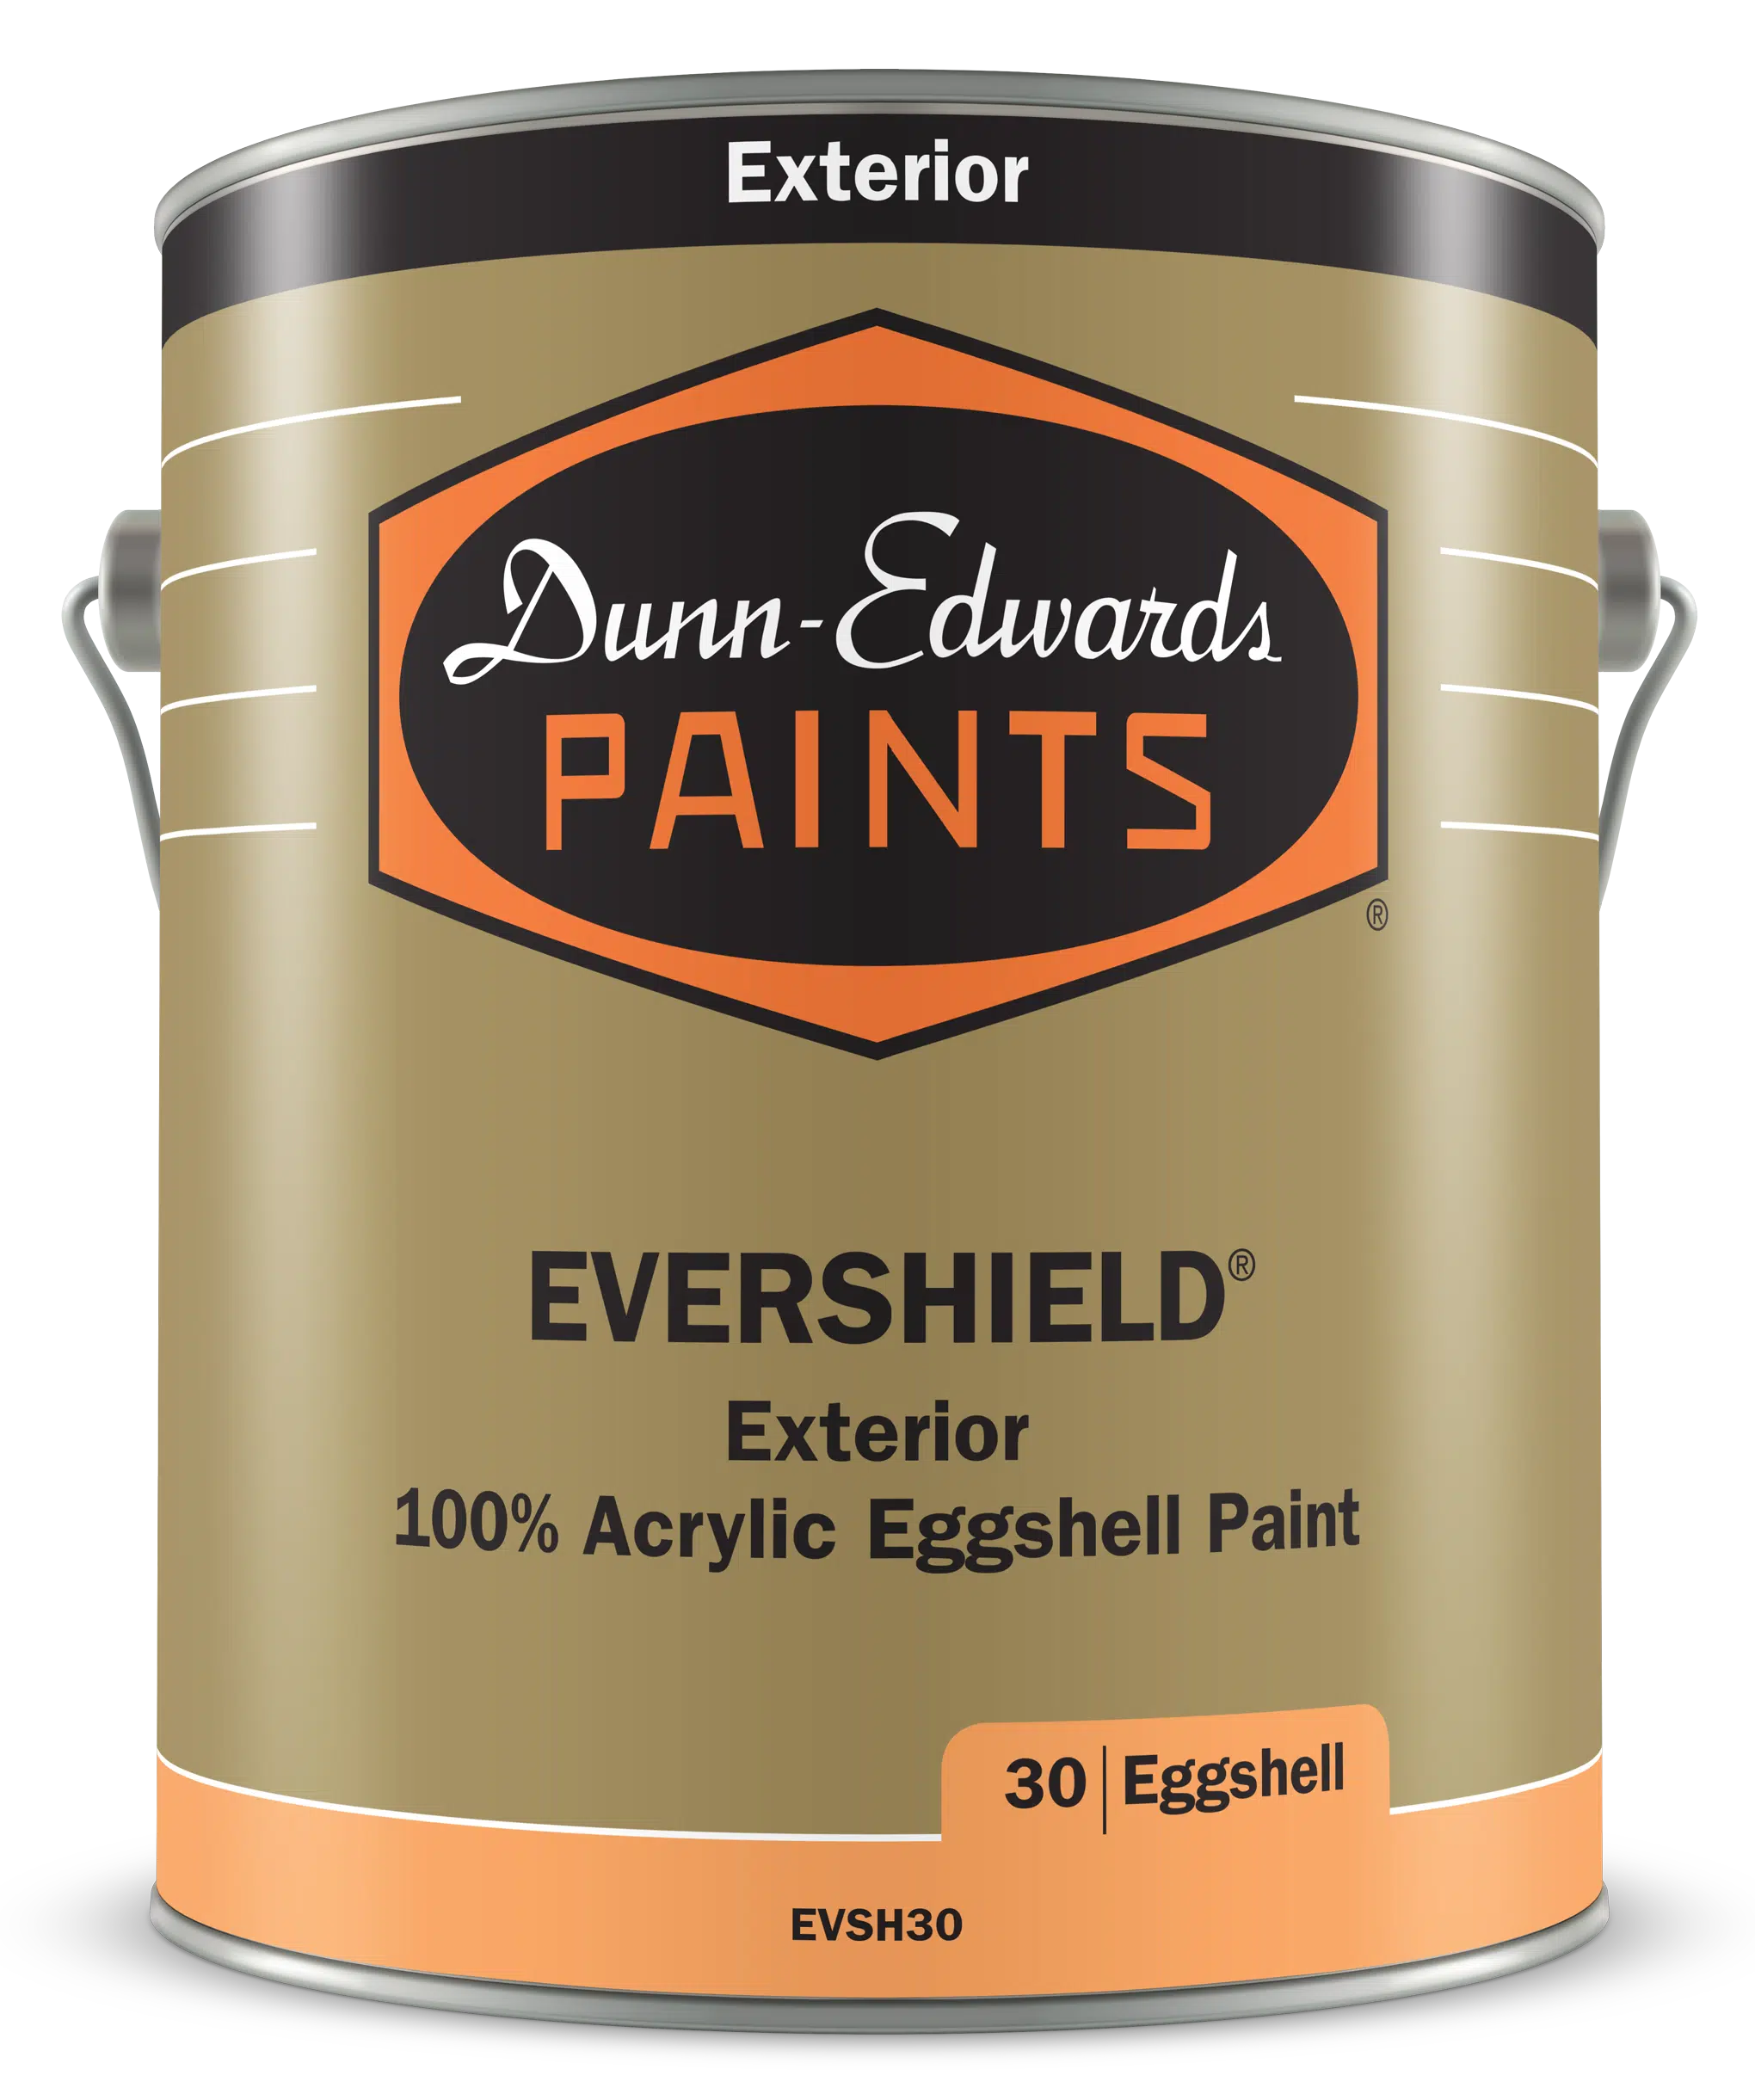 EVERSHIELD Exterior 100% Acrylic Eggshell Paint Can